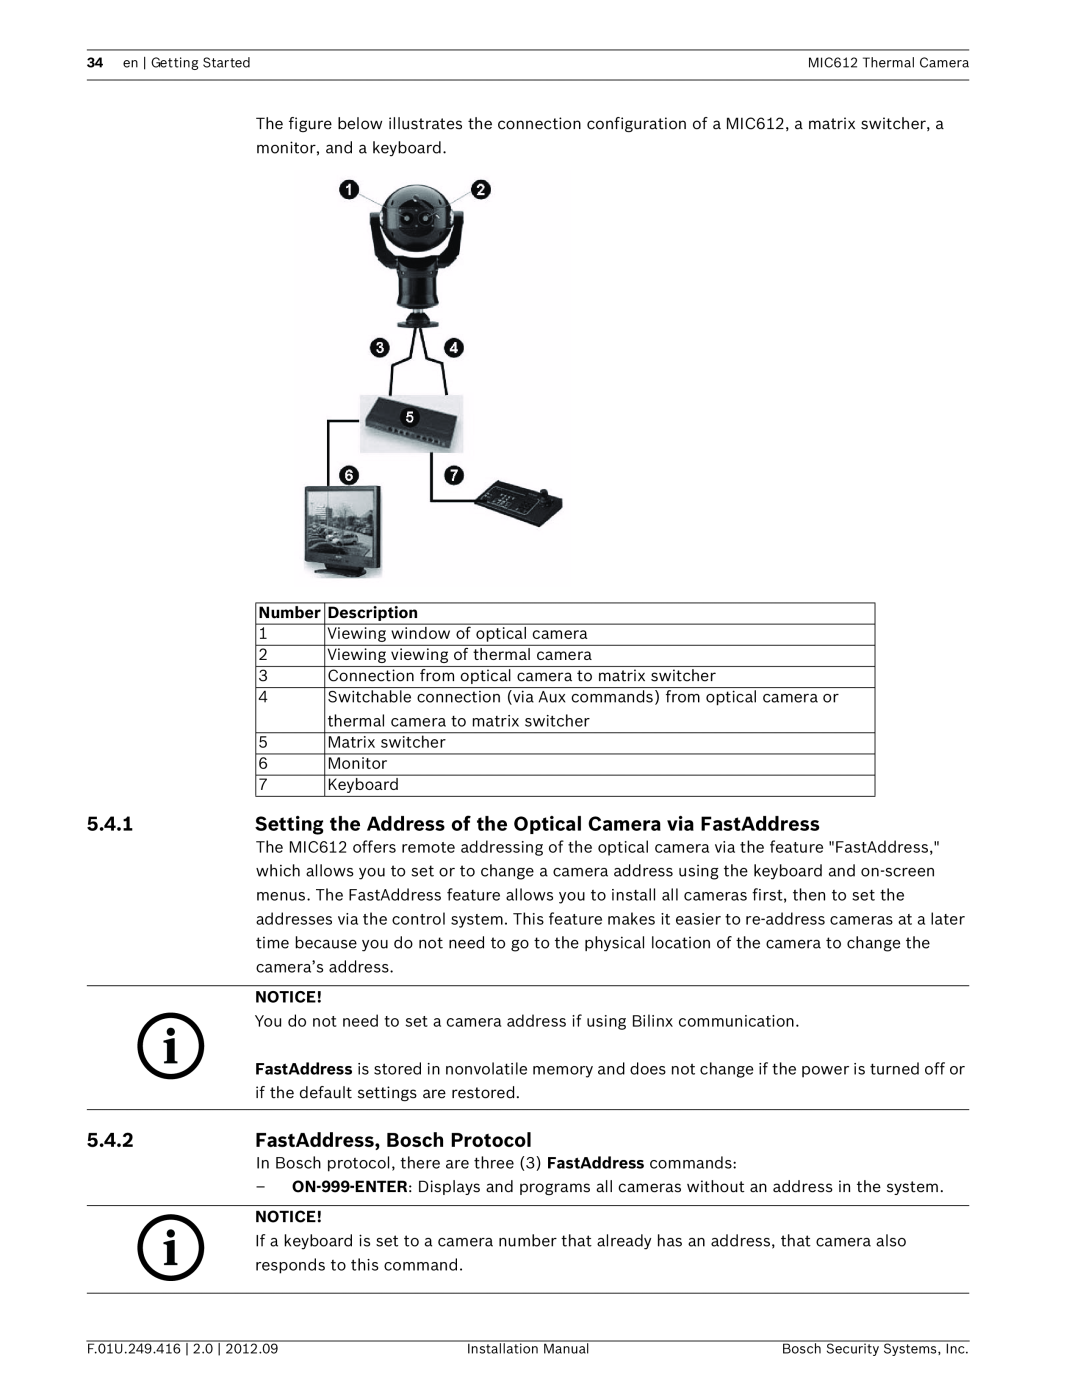 Bosch Appliances MIC612 installation manual 5.4.1, 5.4.2, FastAddress, Bosch Protocol 